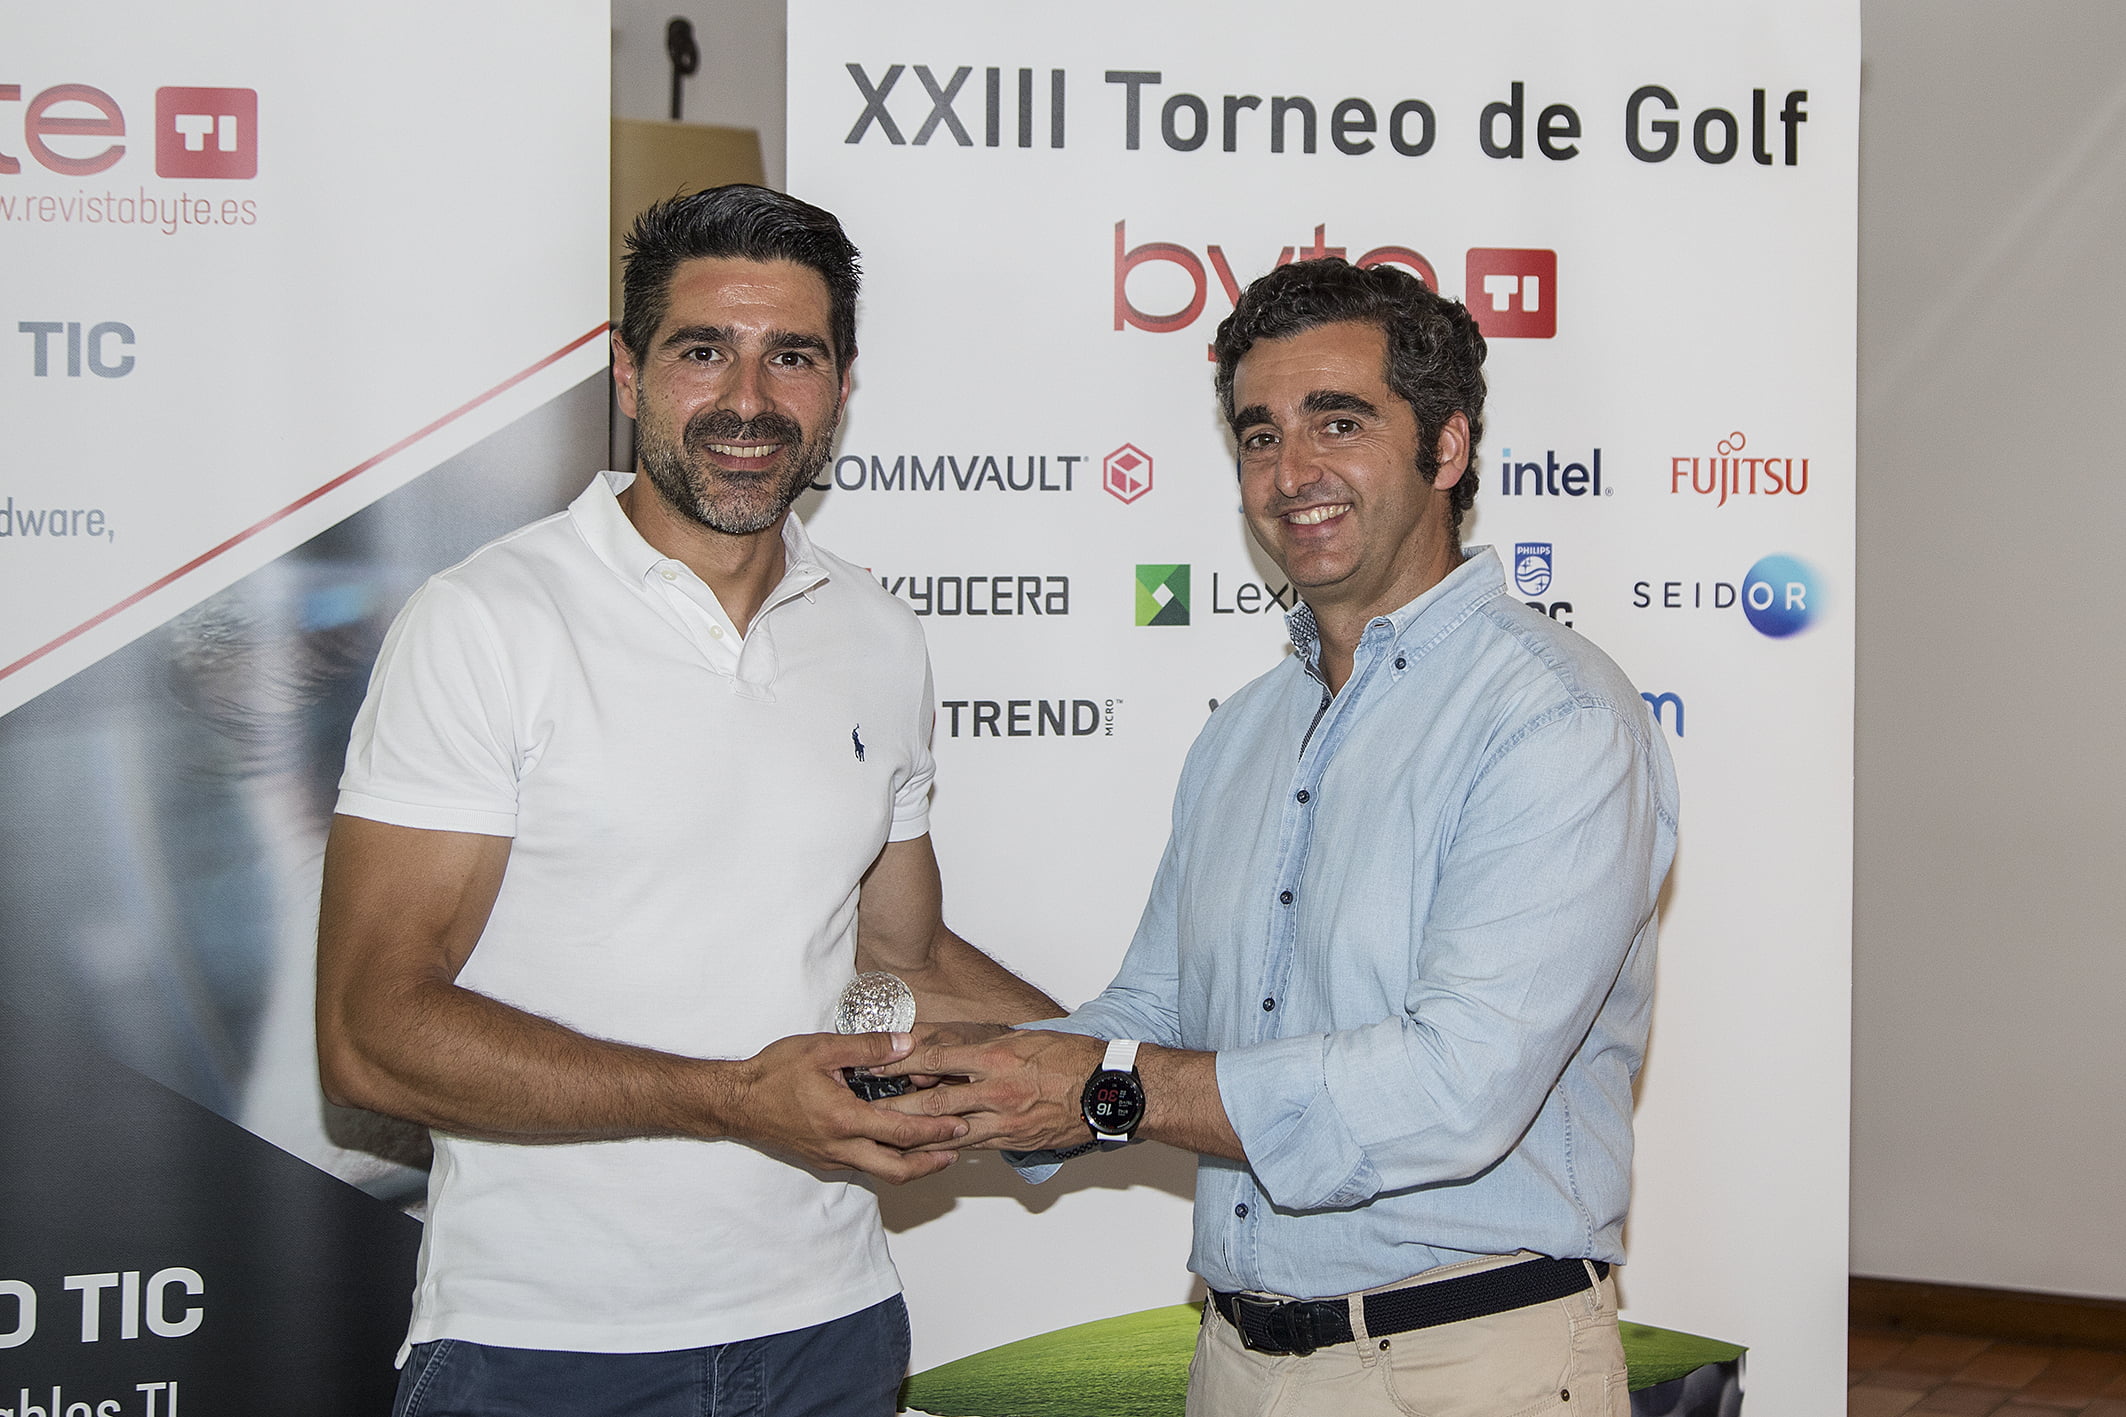 Longest Drive Winner: Javier Torres Alonso, CISO of Allfunds Bank